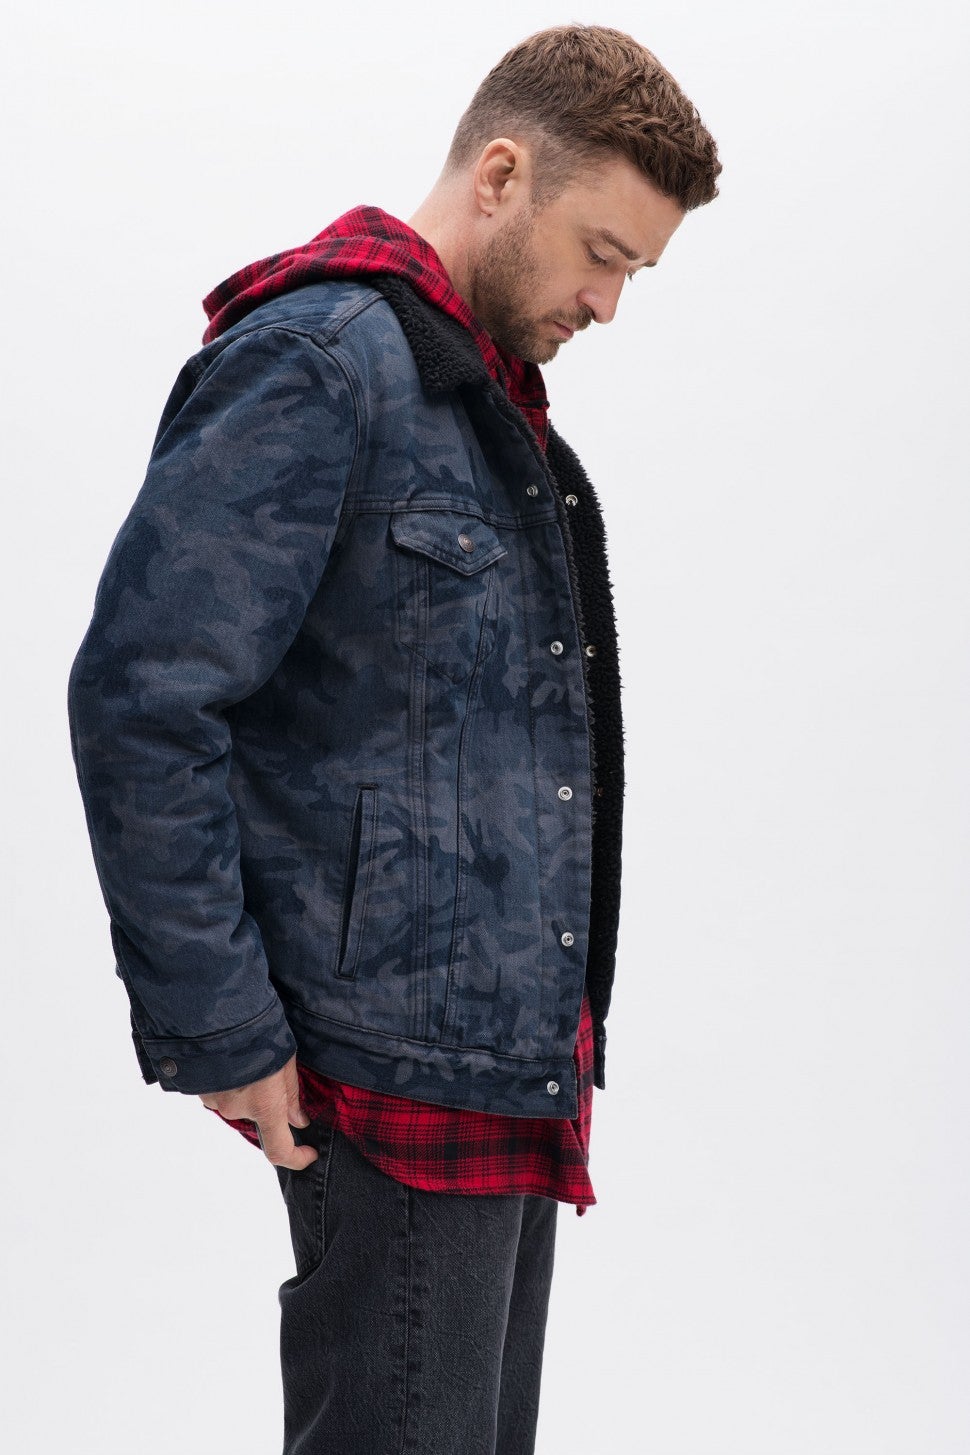 Justin Timberlake denim jacket and red plaid